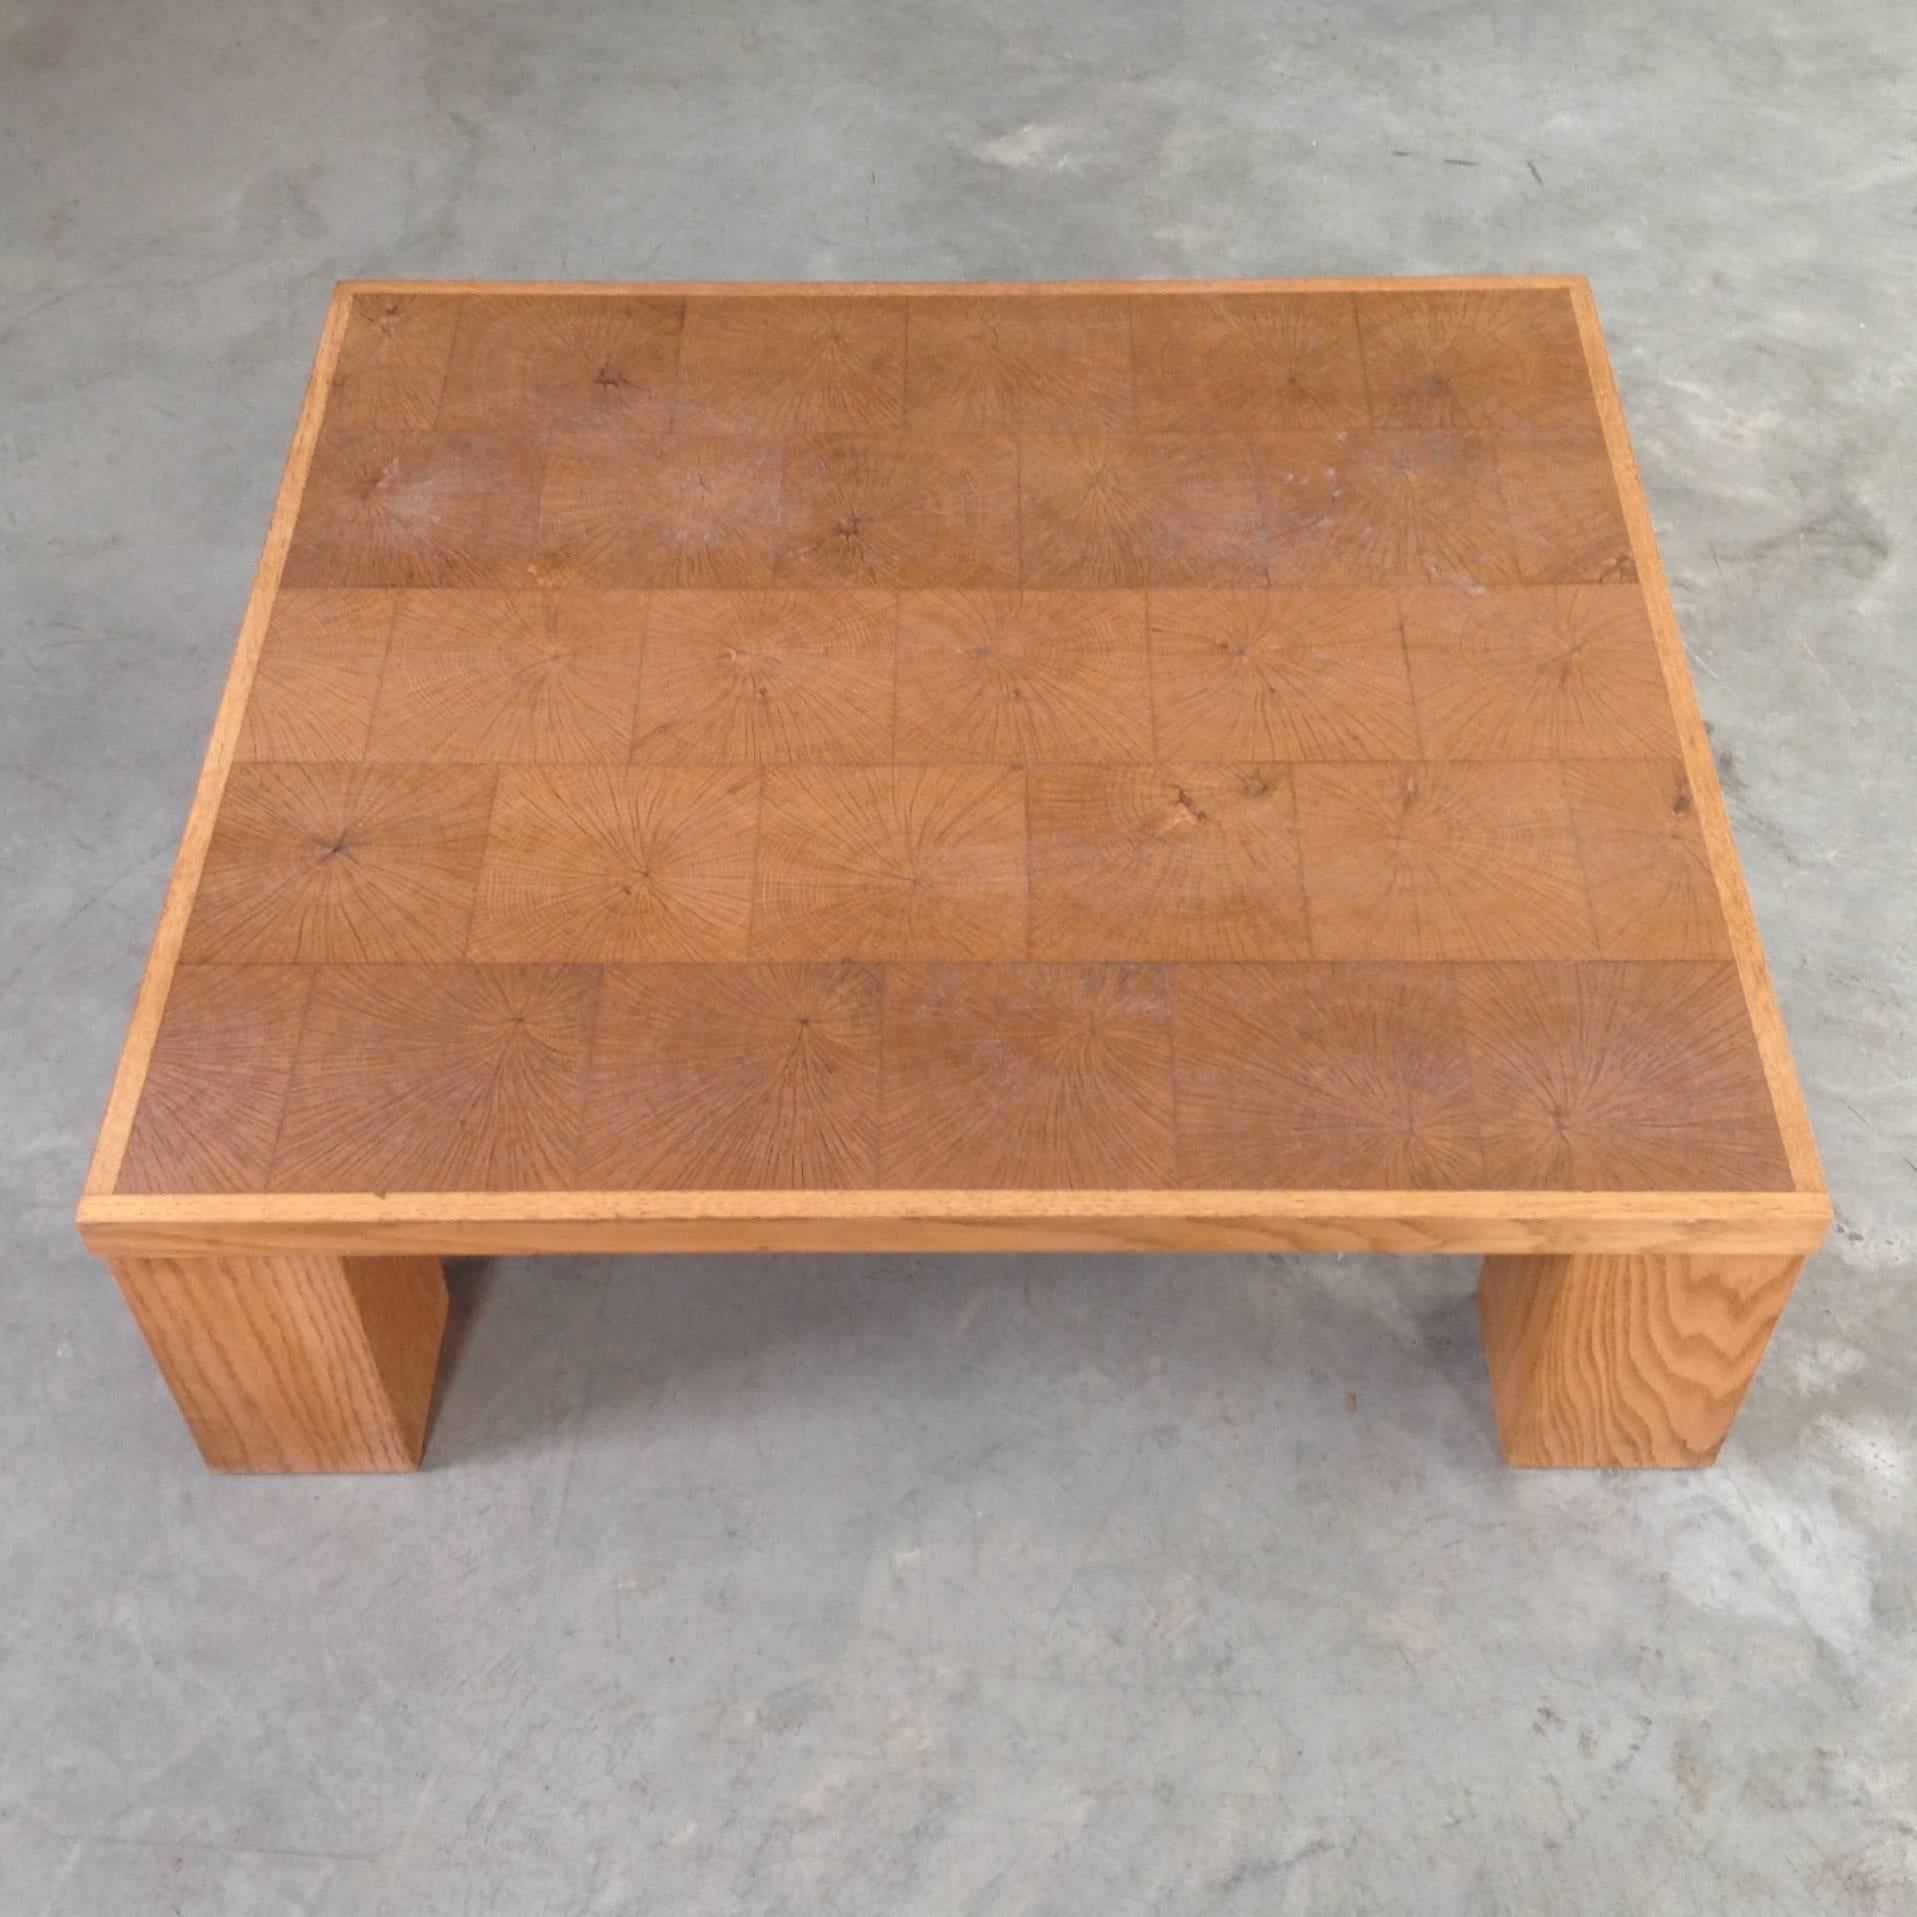 Modern Elegant Coffee Table in Solid Oak Block Wood by Emiel Veranneman, Anno, 1969 For Sale